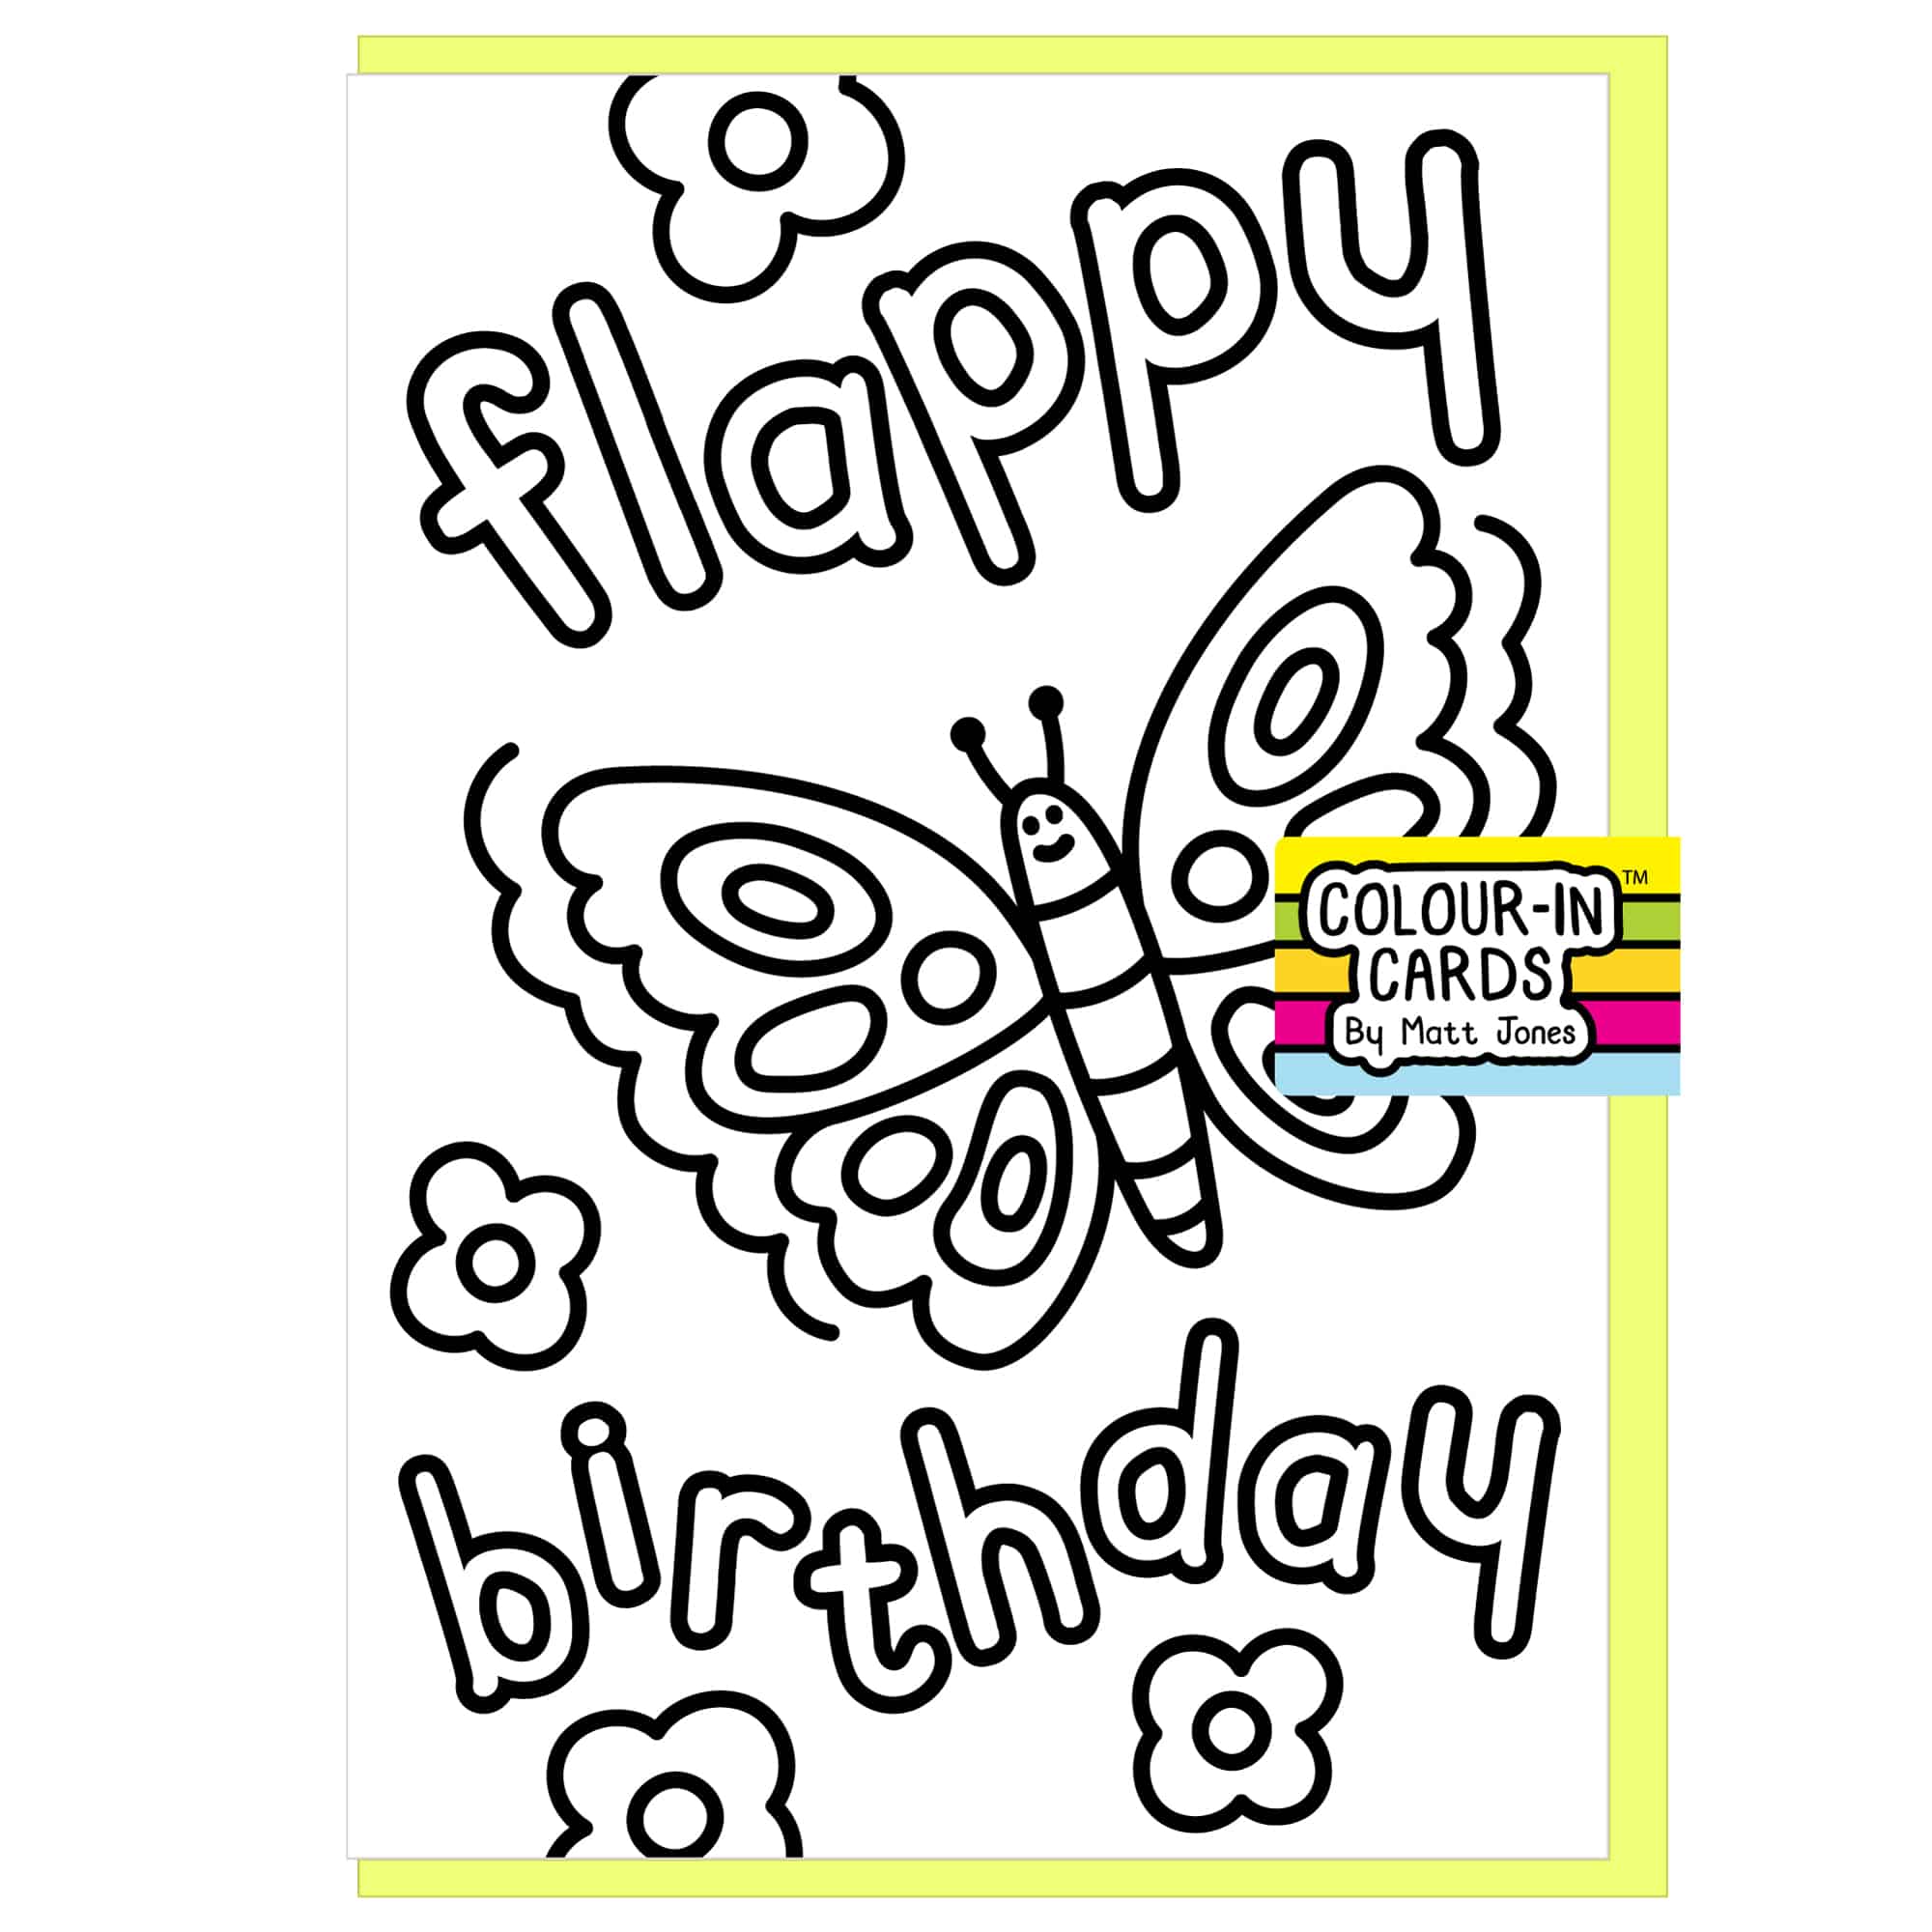 Flappy Birthday Colour in Card by Matt Jones Lunartik